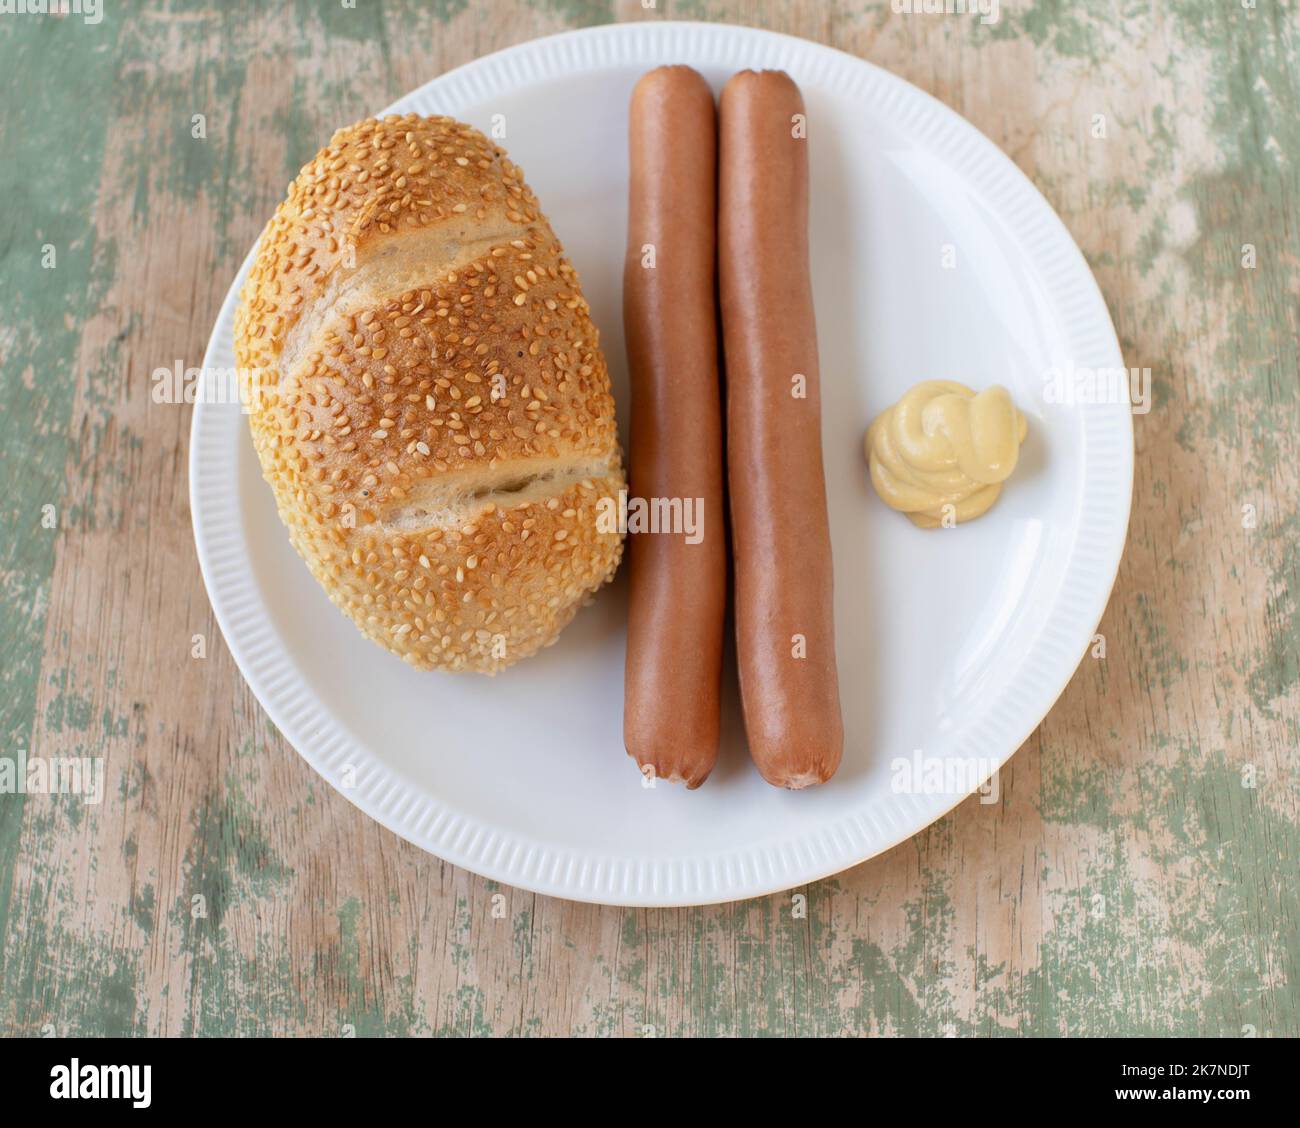 Vienna sausage with mustard and sesame seed bun Stock Photo